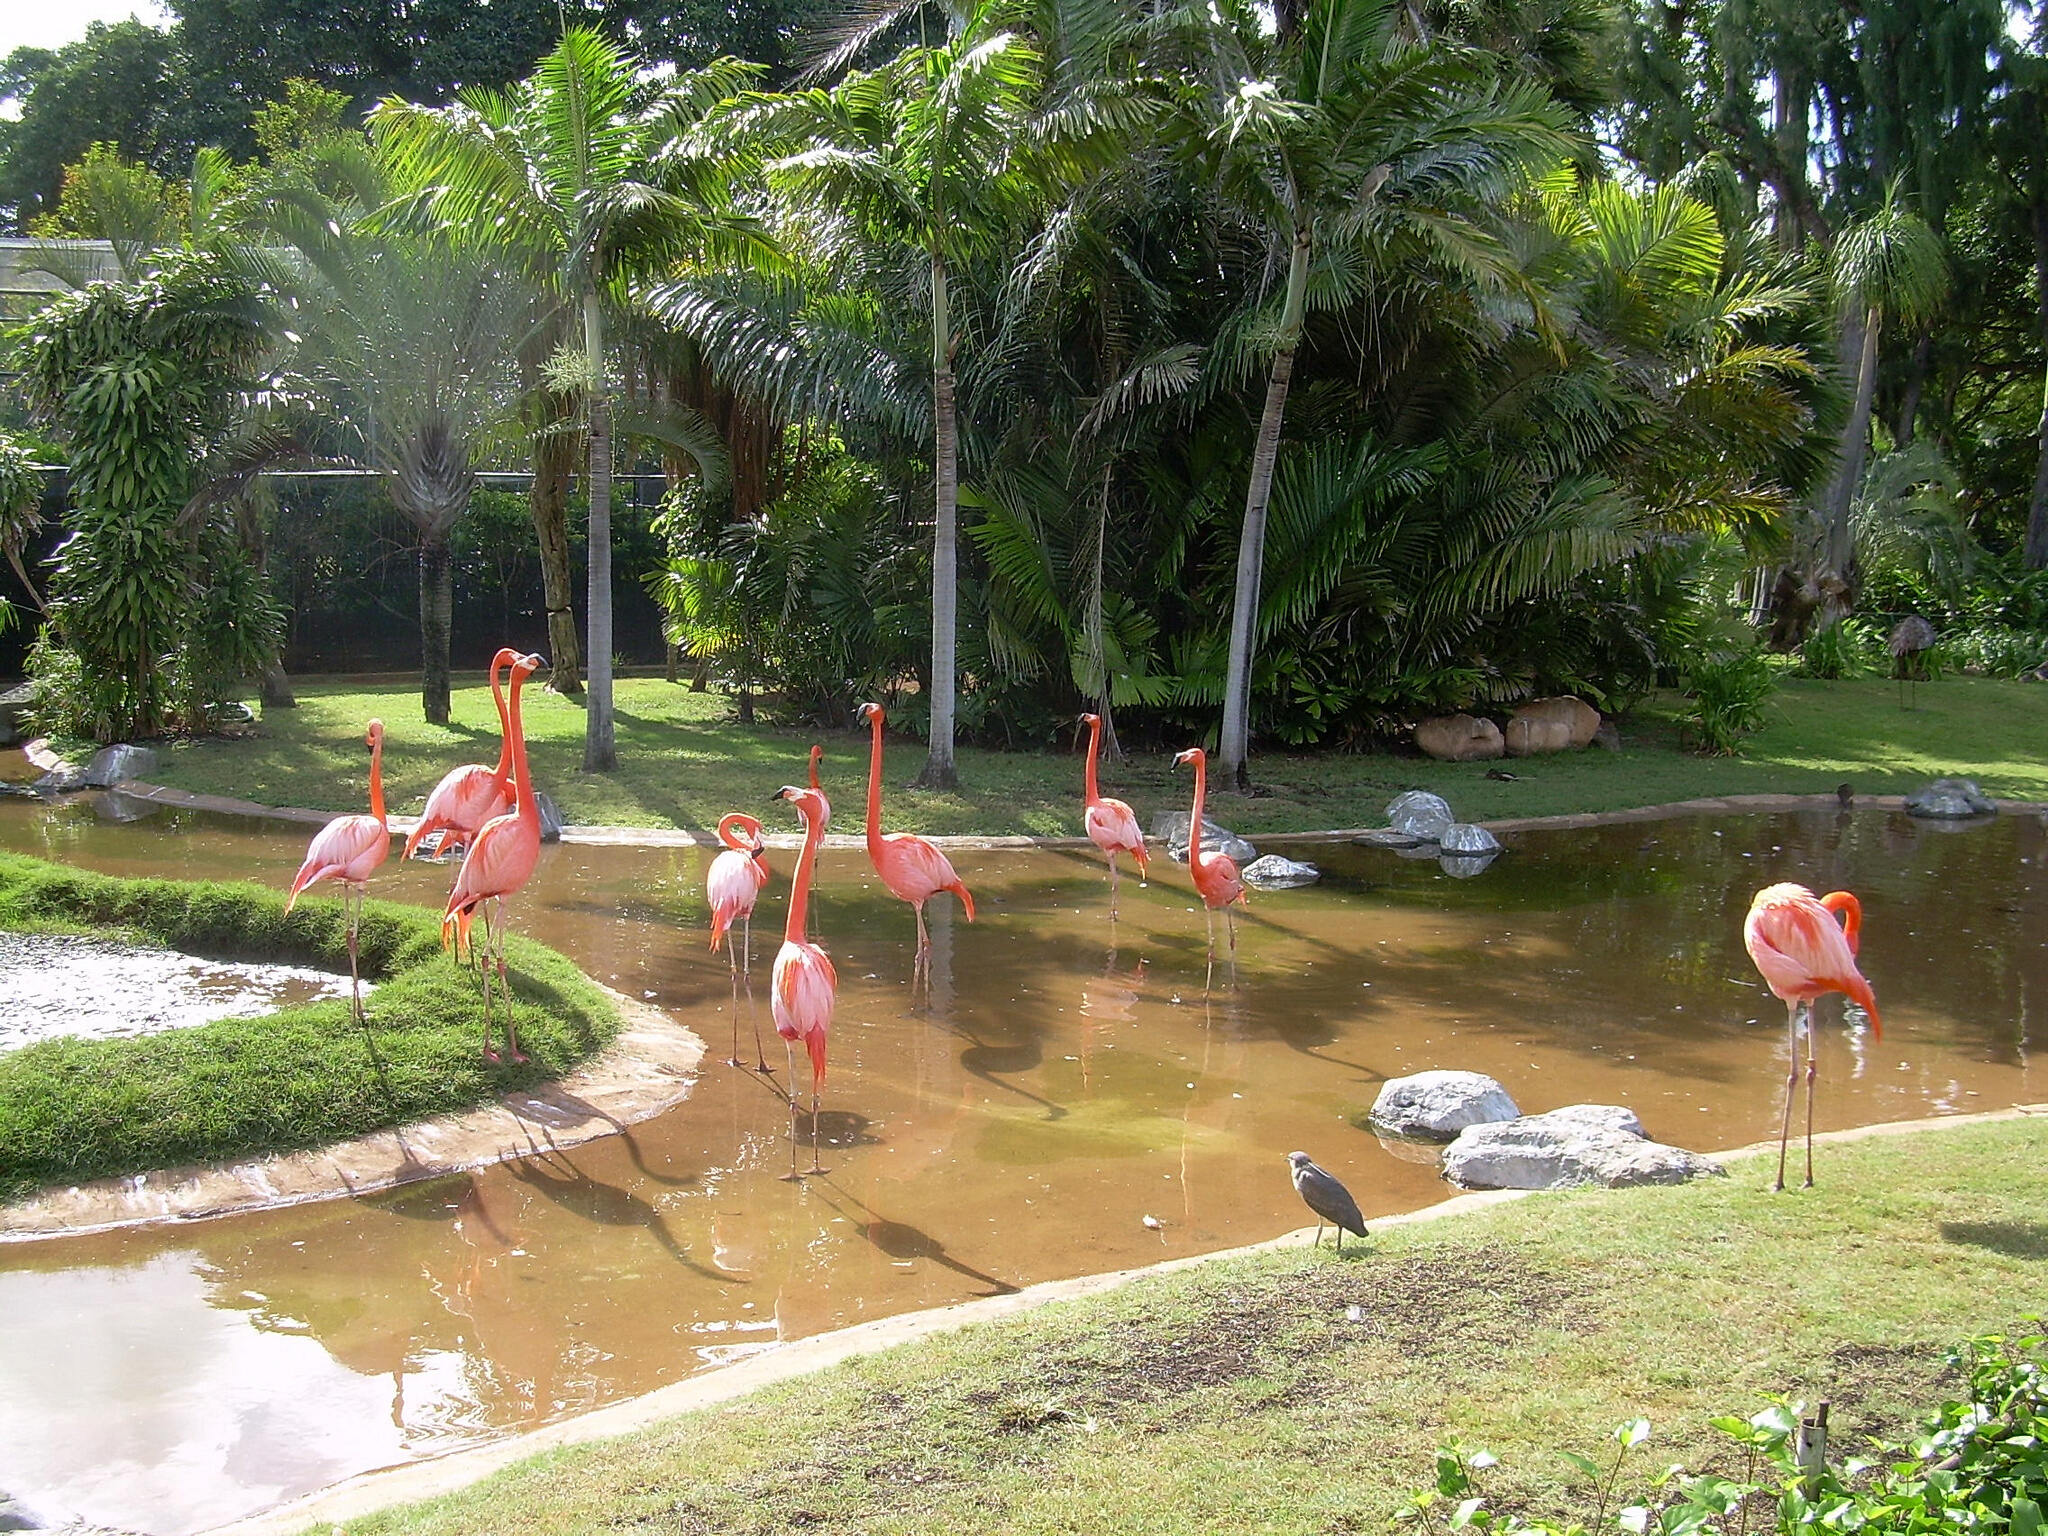 American Flamingos from the Waikiki Zoo